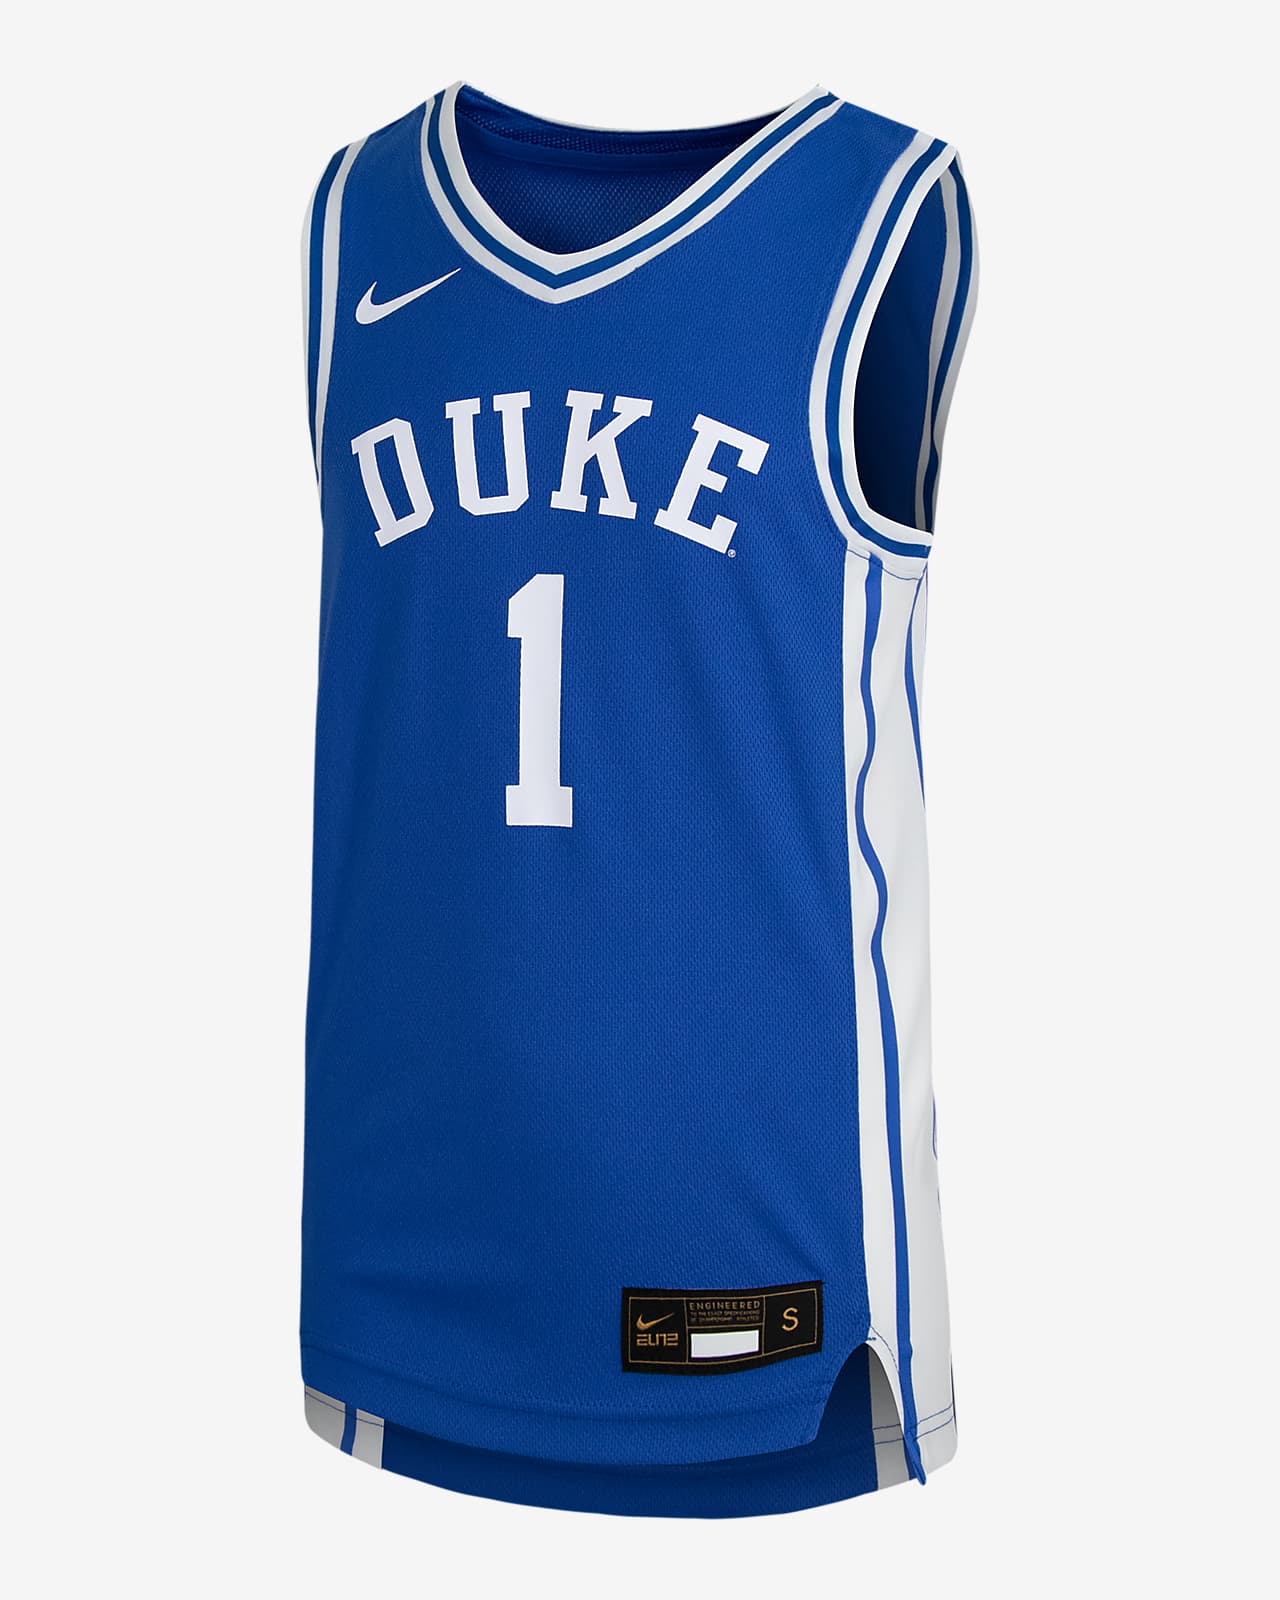 Nike College (Duke) Big Kids' Basketball Jersey